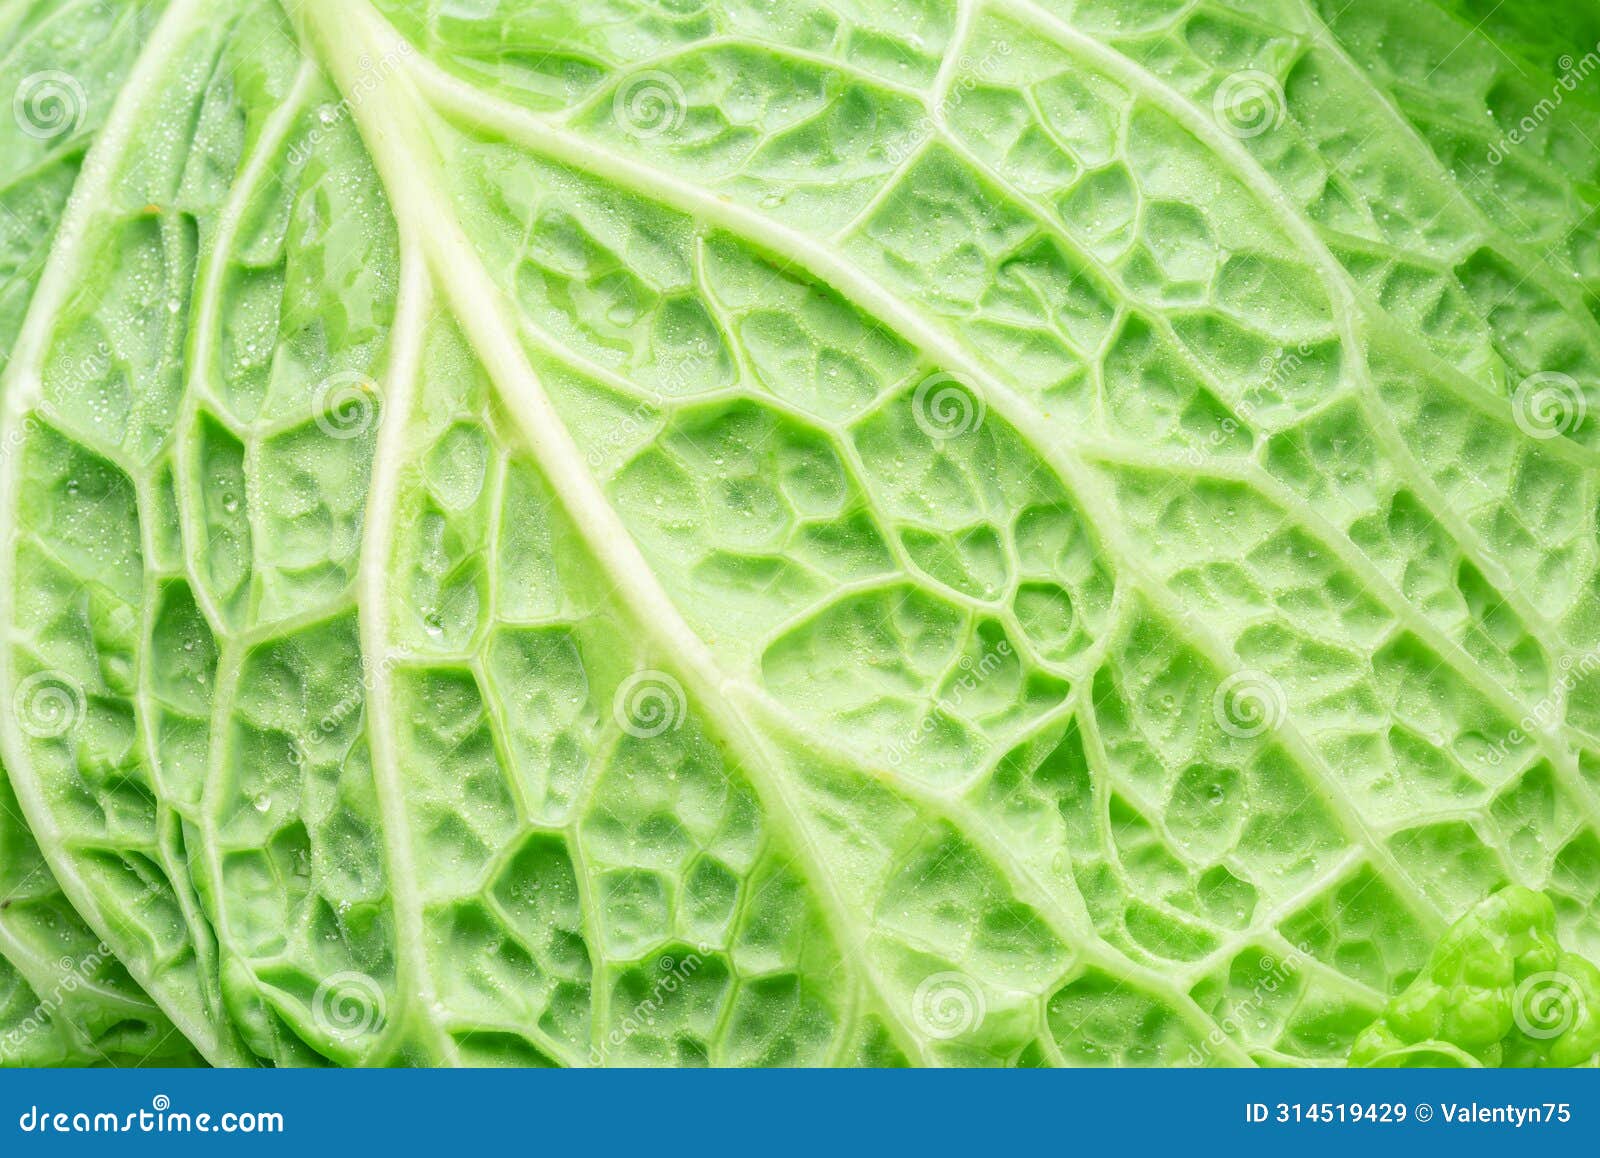 texture of fresh green savoy cabbage leaf closeup